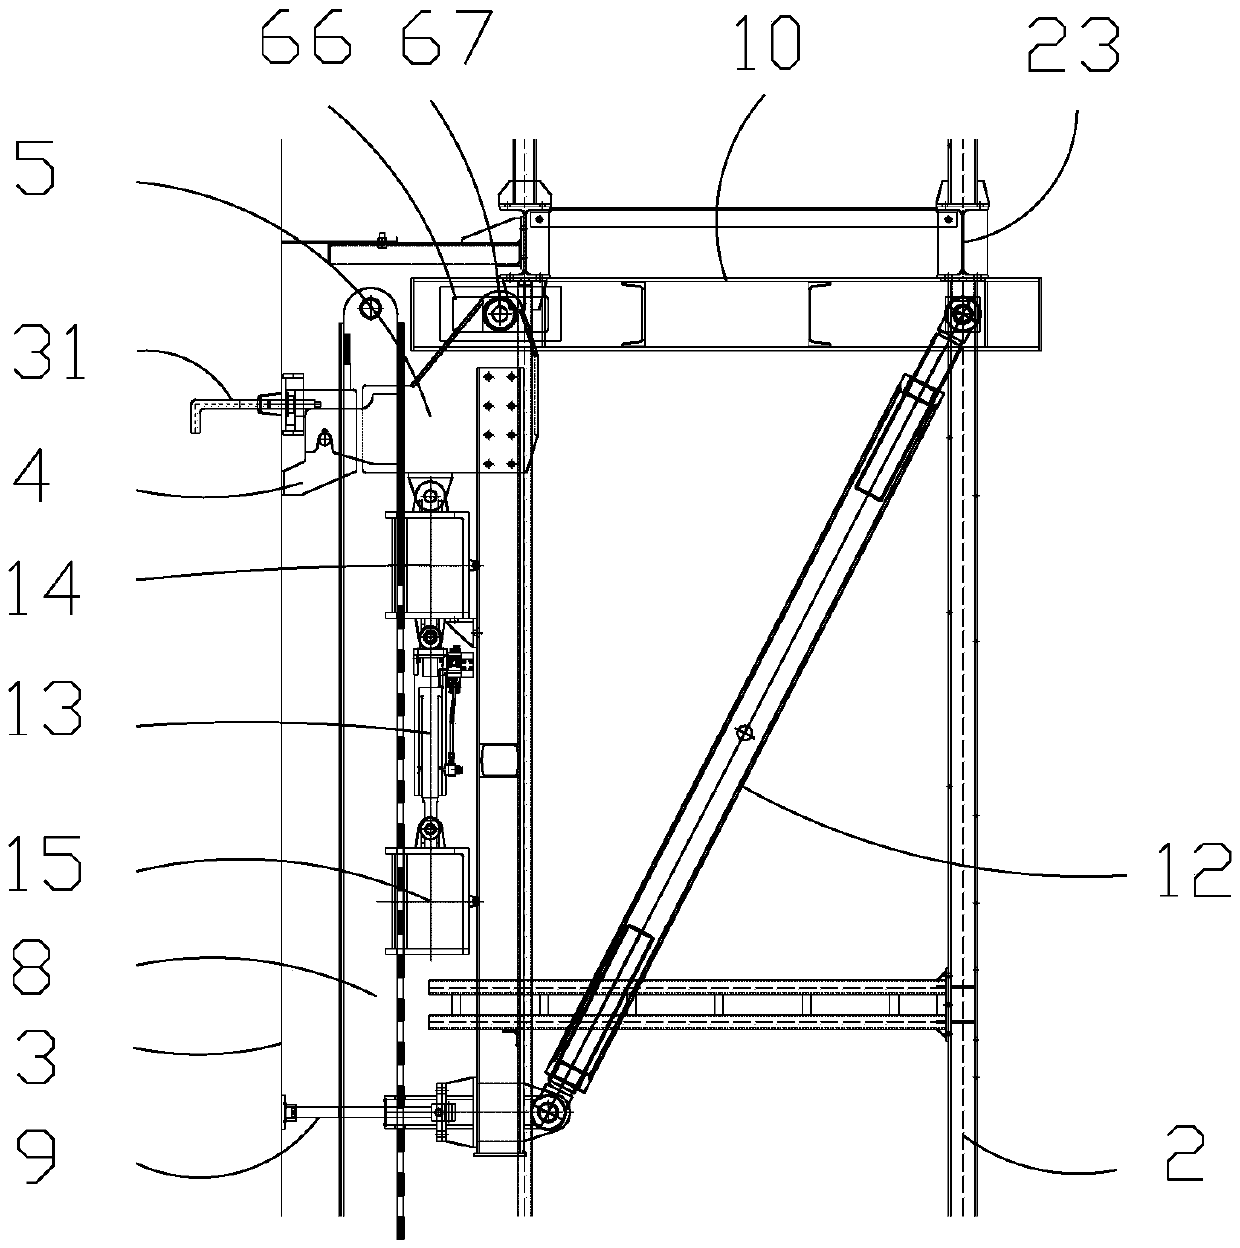 Portal self-adaptive telescopic hydraulic climbing platform system and its climbing method